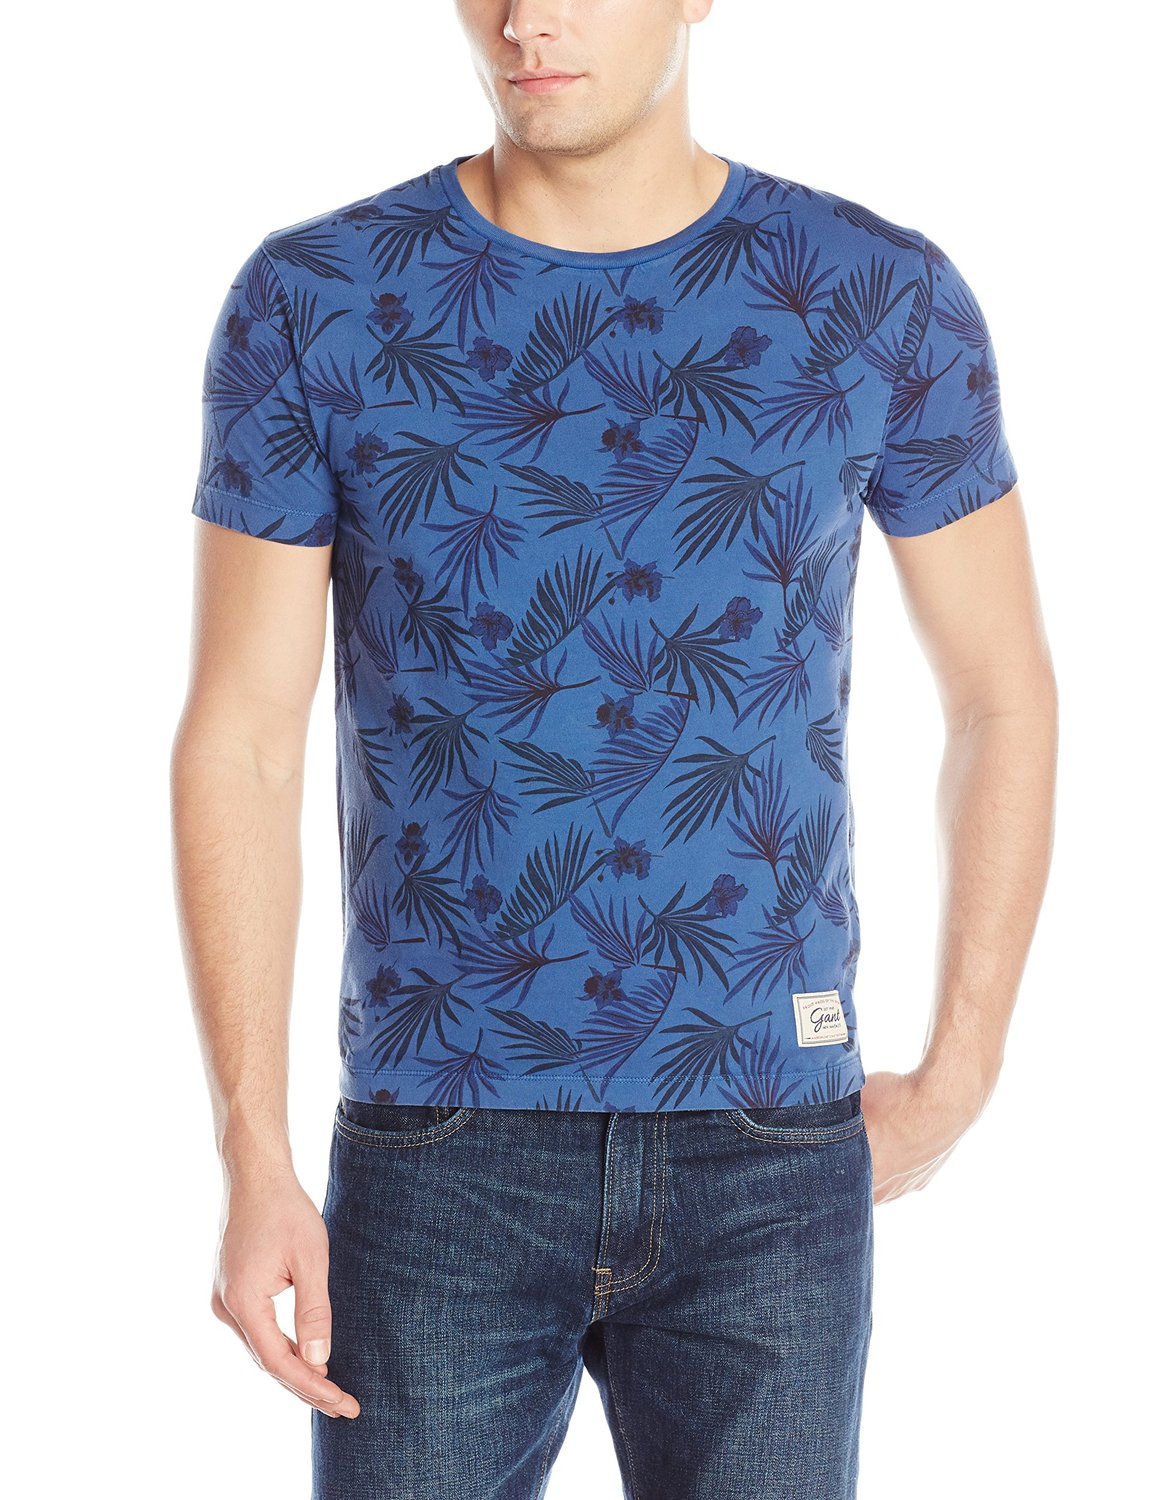 GANT Men's Floral Overdyed T-Shirt